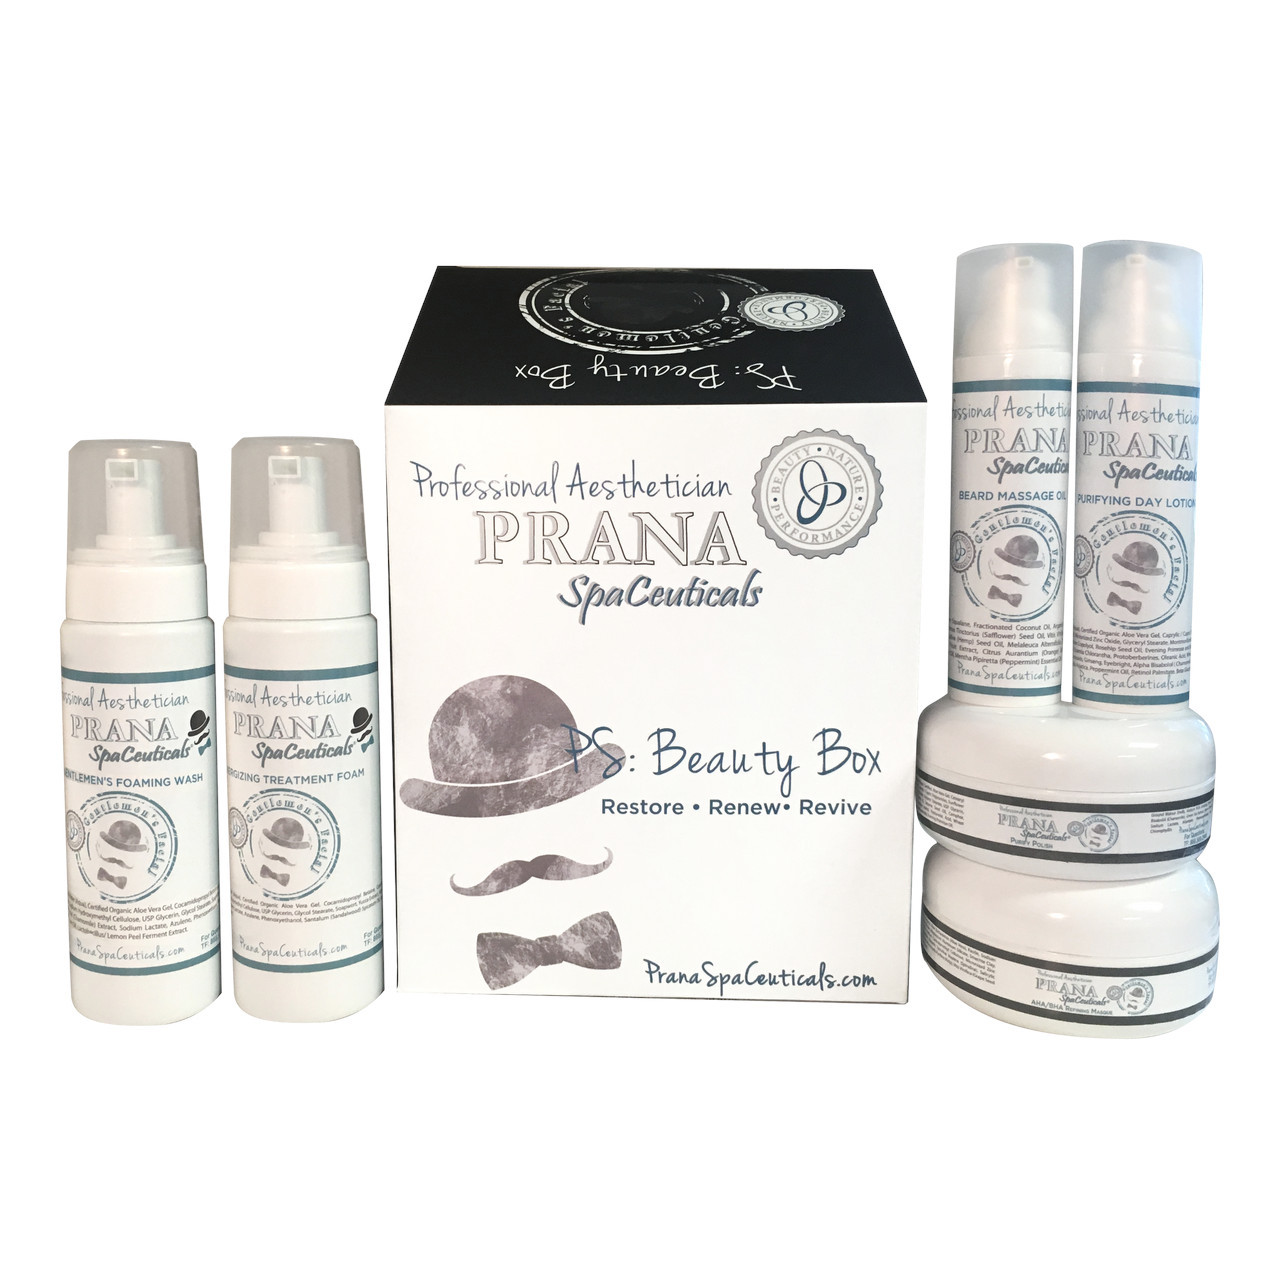 Prana SpaCeuticals Gentlemen's Facial Beauty Box Kit